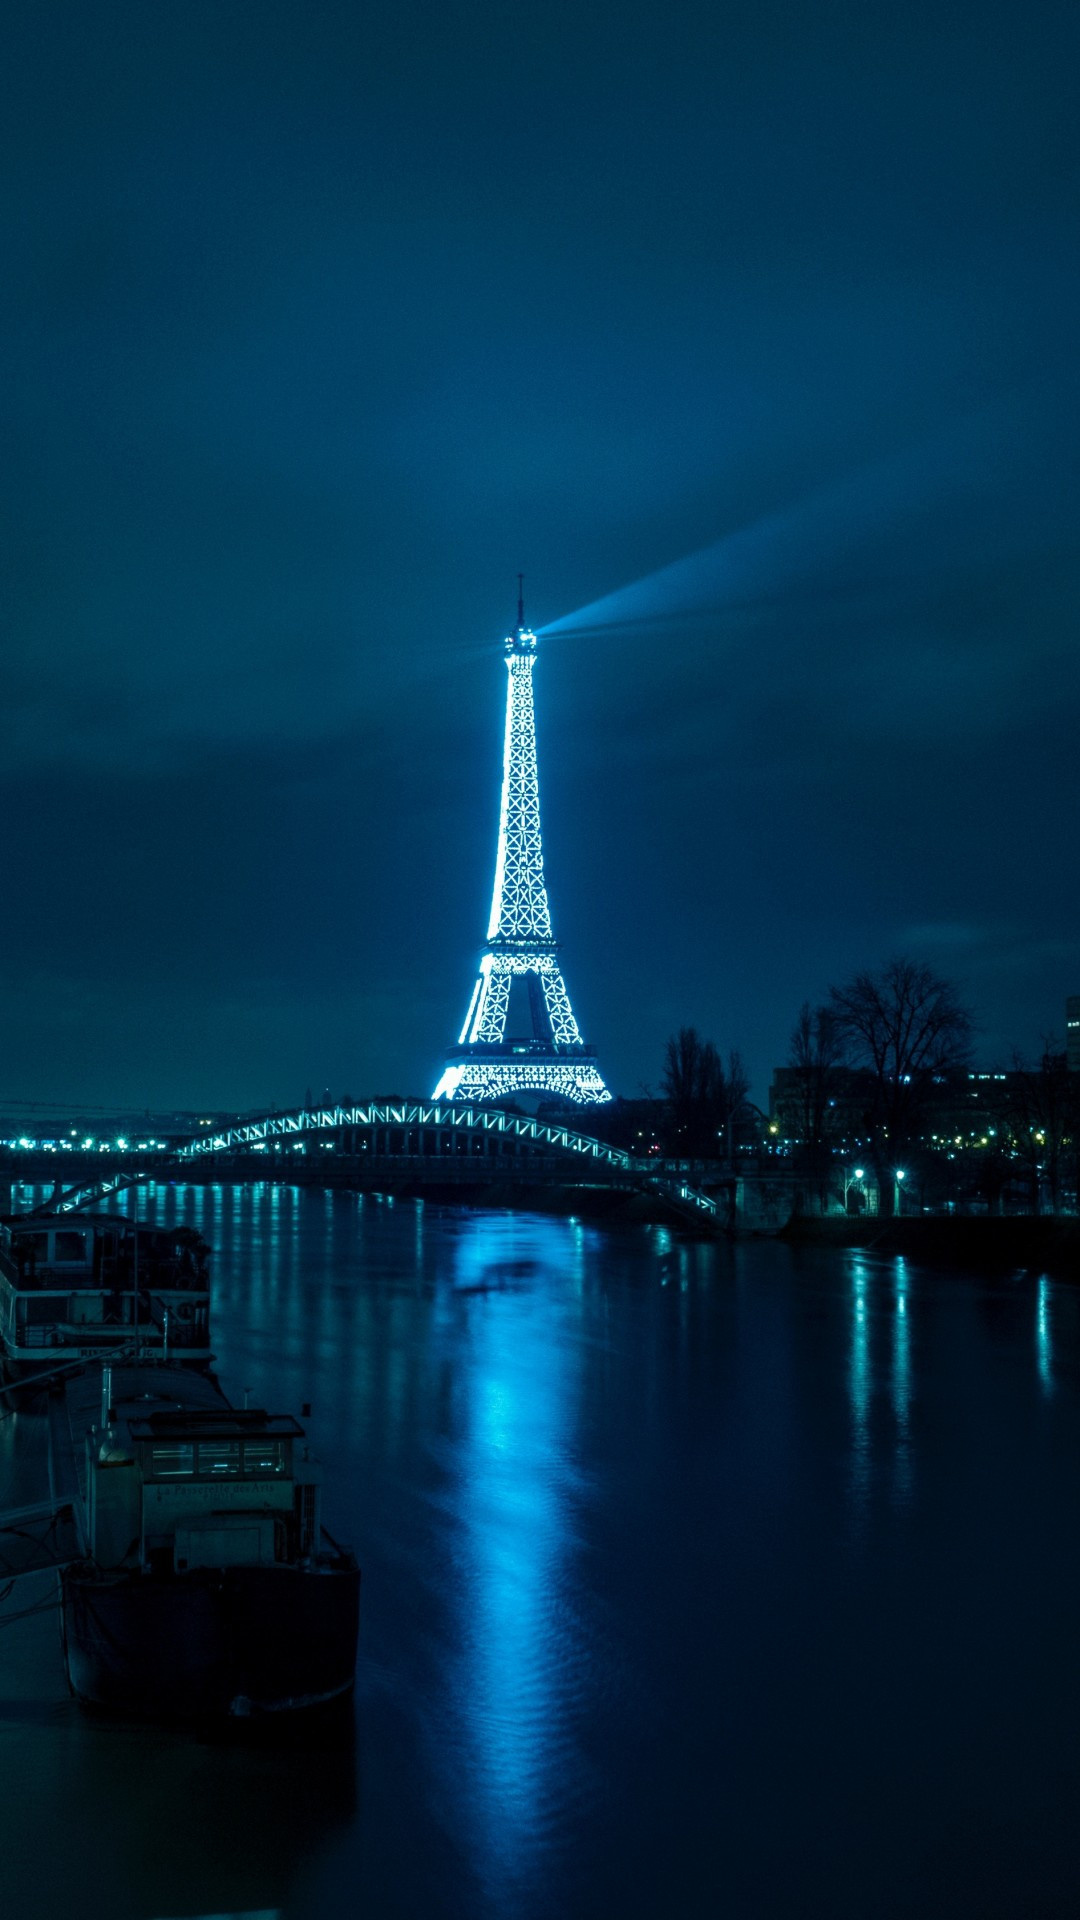 Paris: Eiffel Tower, Night city lights, River, Cityscape. 1080x1920 Full HD Wallpaper.